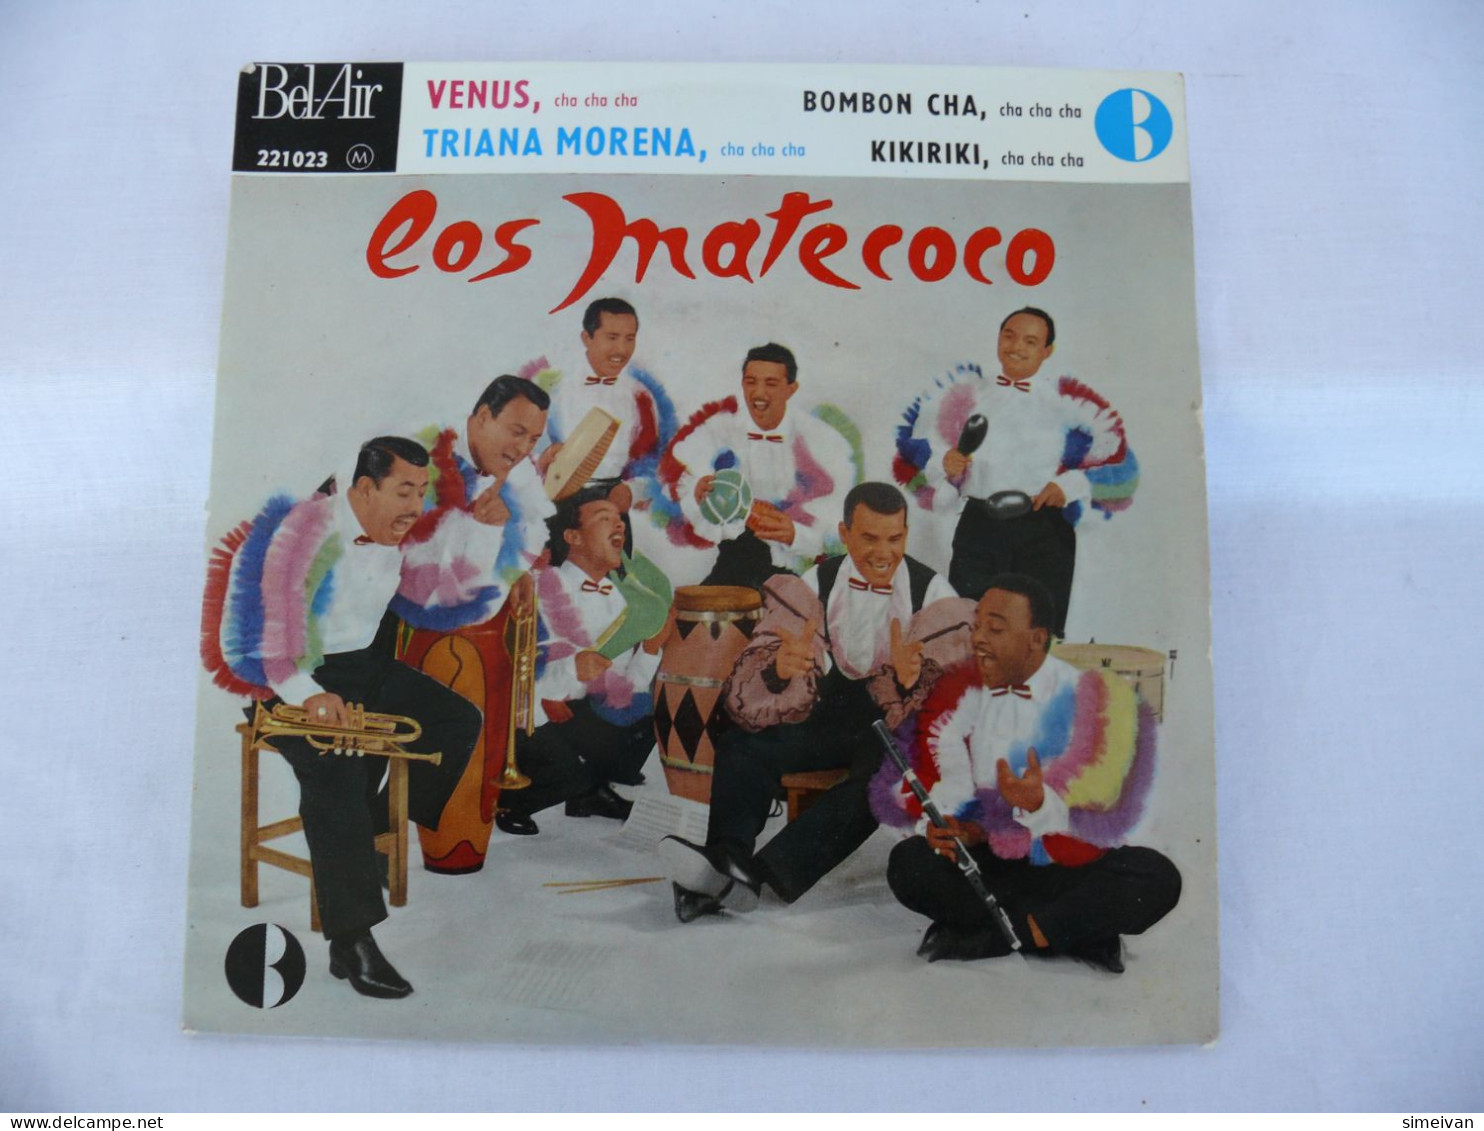 LOS MATECOCO VENUS, Cha Cha Cha RARE 7" VINYL 45 EP 1962 MADE IN FRANCE #1352 - Musiques Du Monde